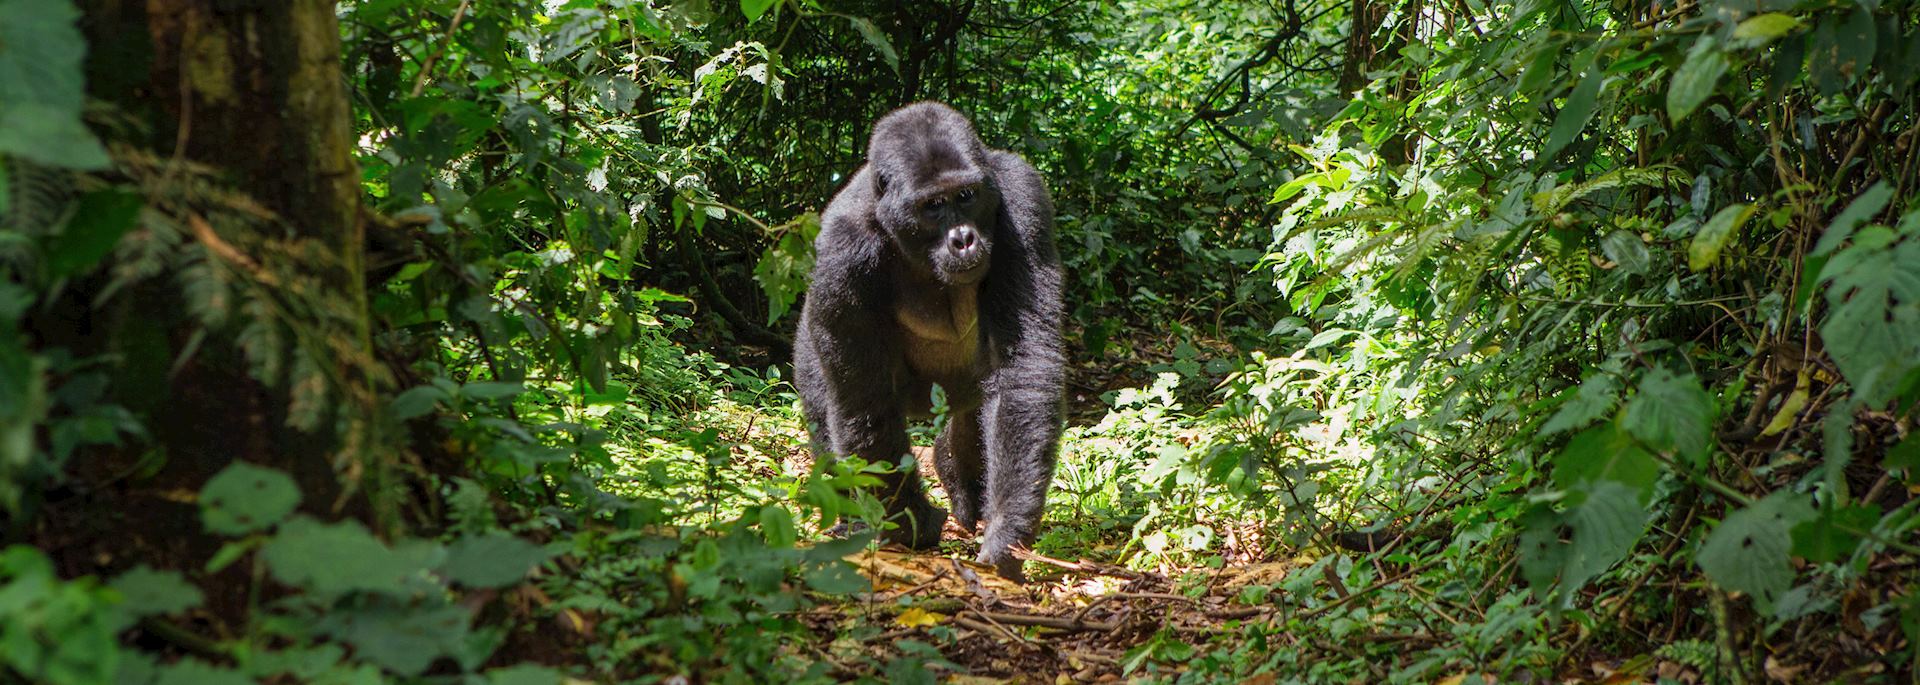 Mountain gorilla, Bwindi Impenetrable Forest